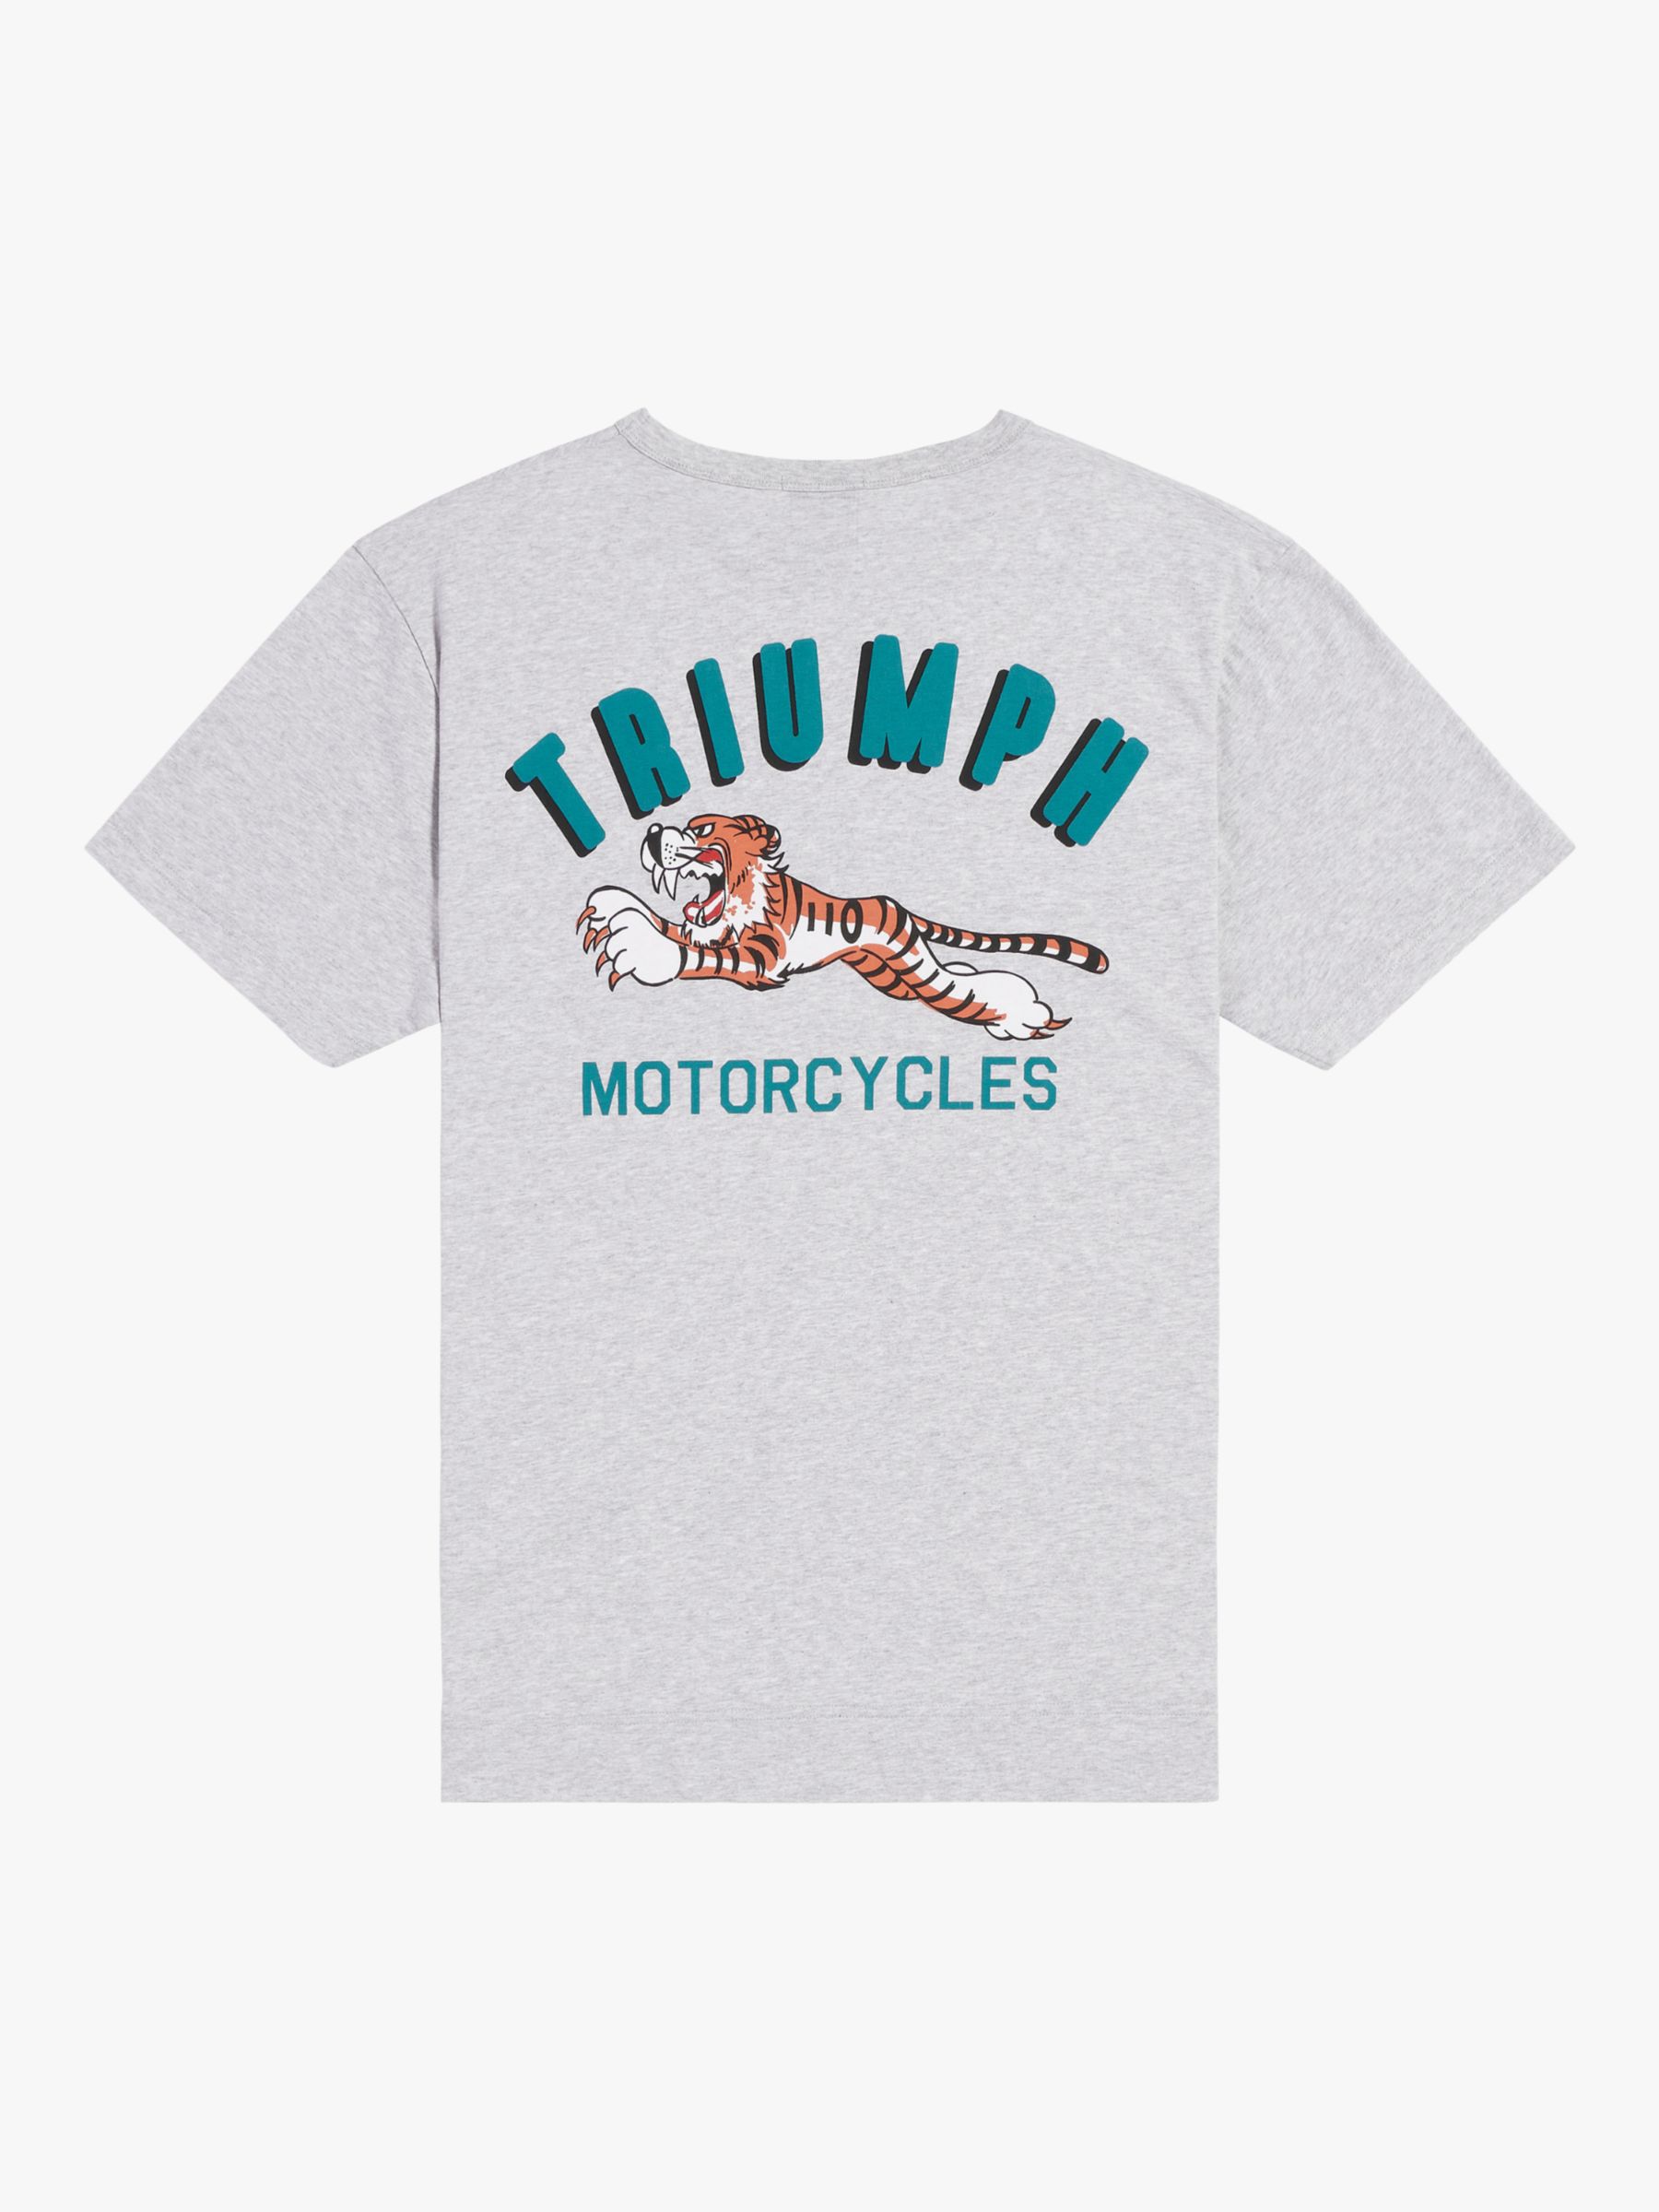 Triumph Motorcycles Super Sport Graphic T-Shirt, Silver Marl, L